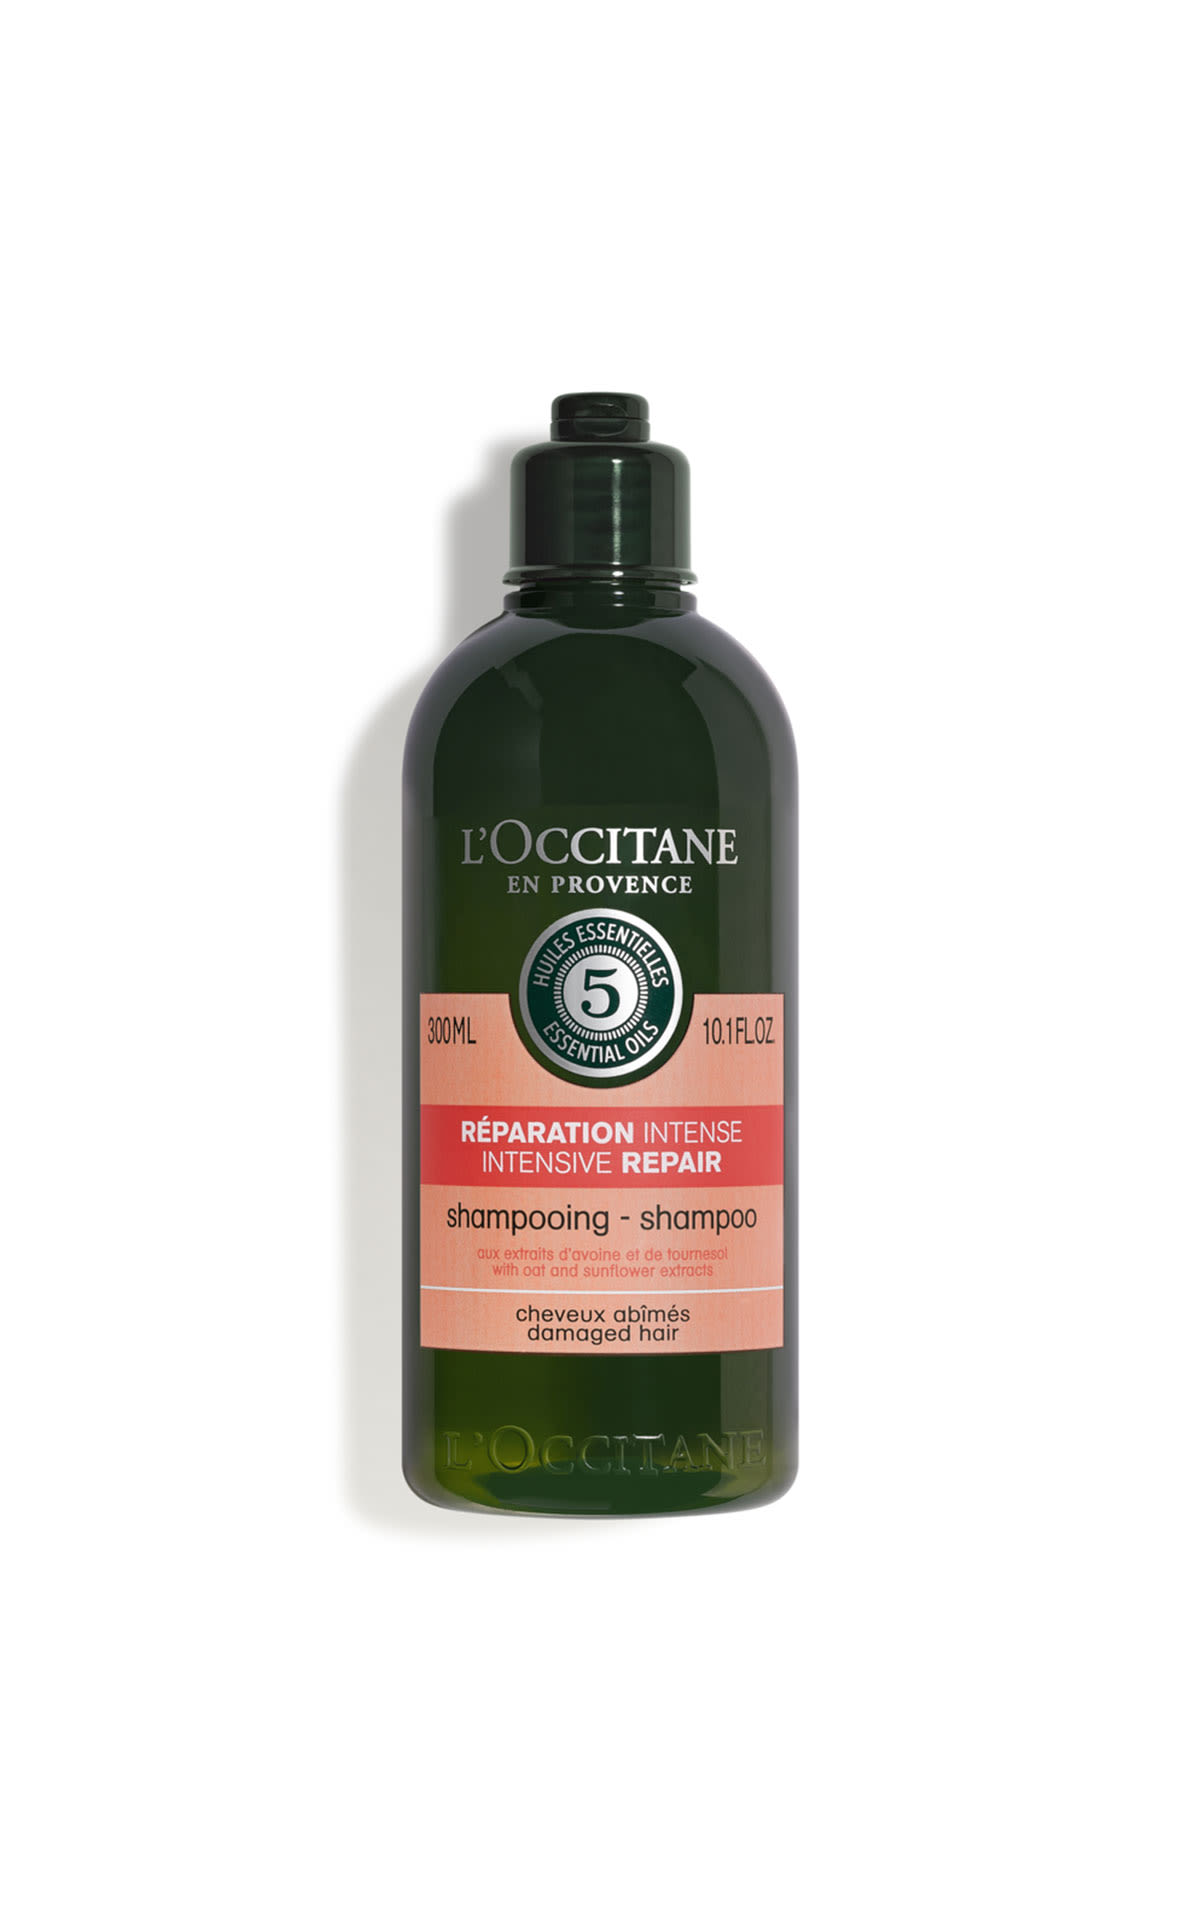 L'Occitane en Provence Intensive repair shampoo 300ml from Bicester Village